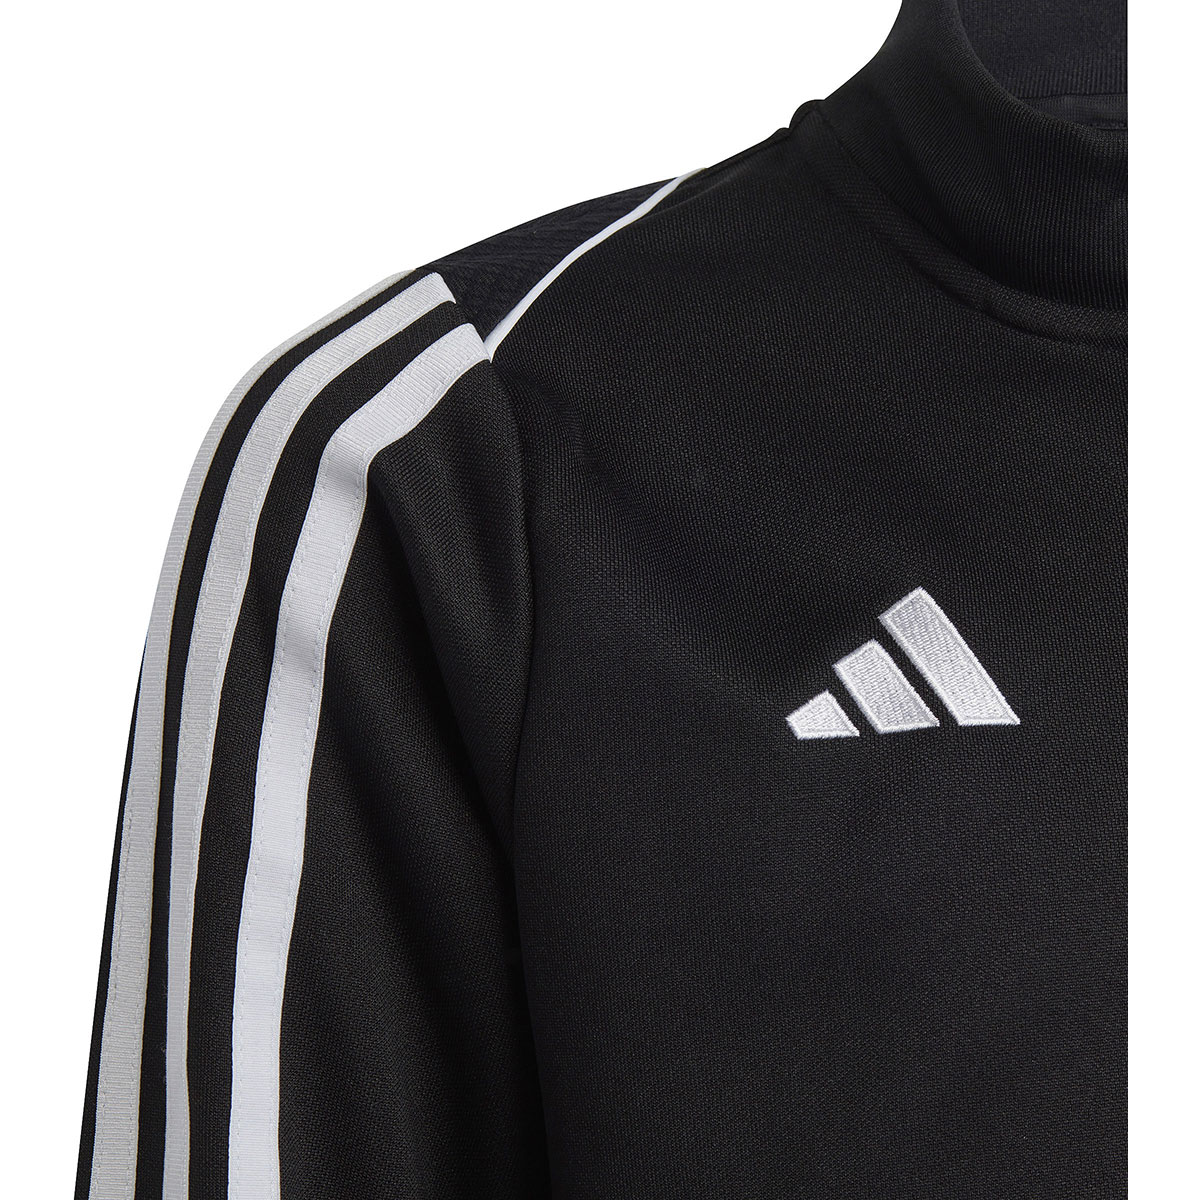 Adidas Kinder Trainingsjacke Tiro 23 schwarz